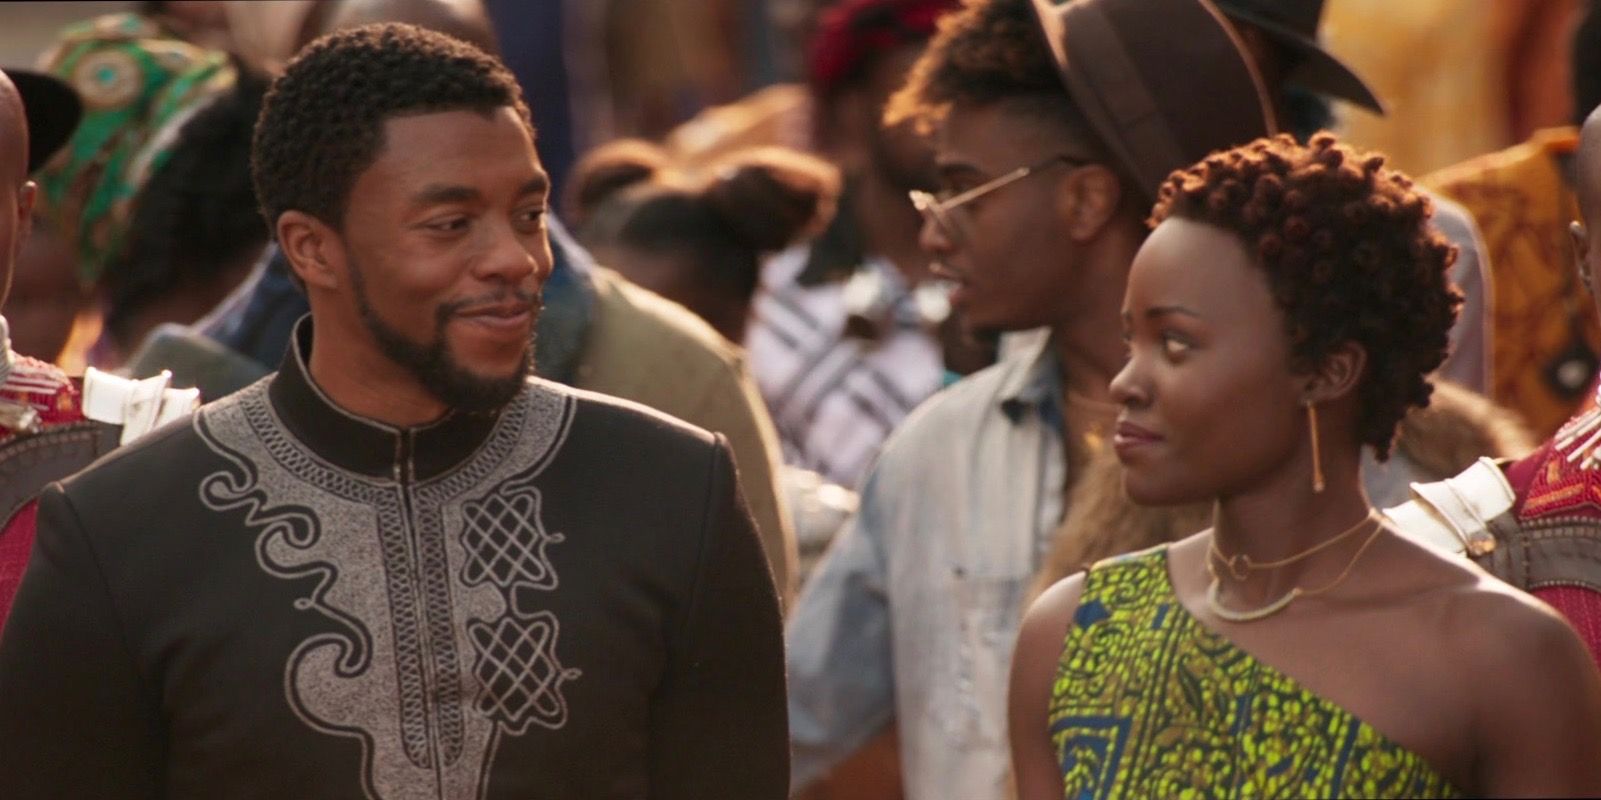 Chadwick Boseman and Lupita Nyong'o as T'Challa and Nakia in Black Panther walk in the Wakandan market.